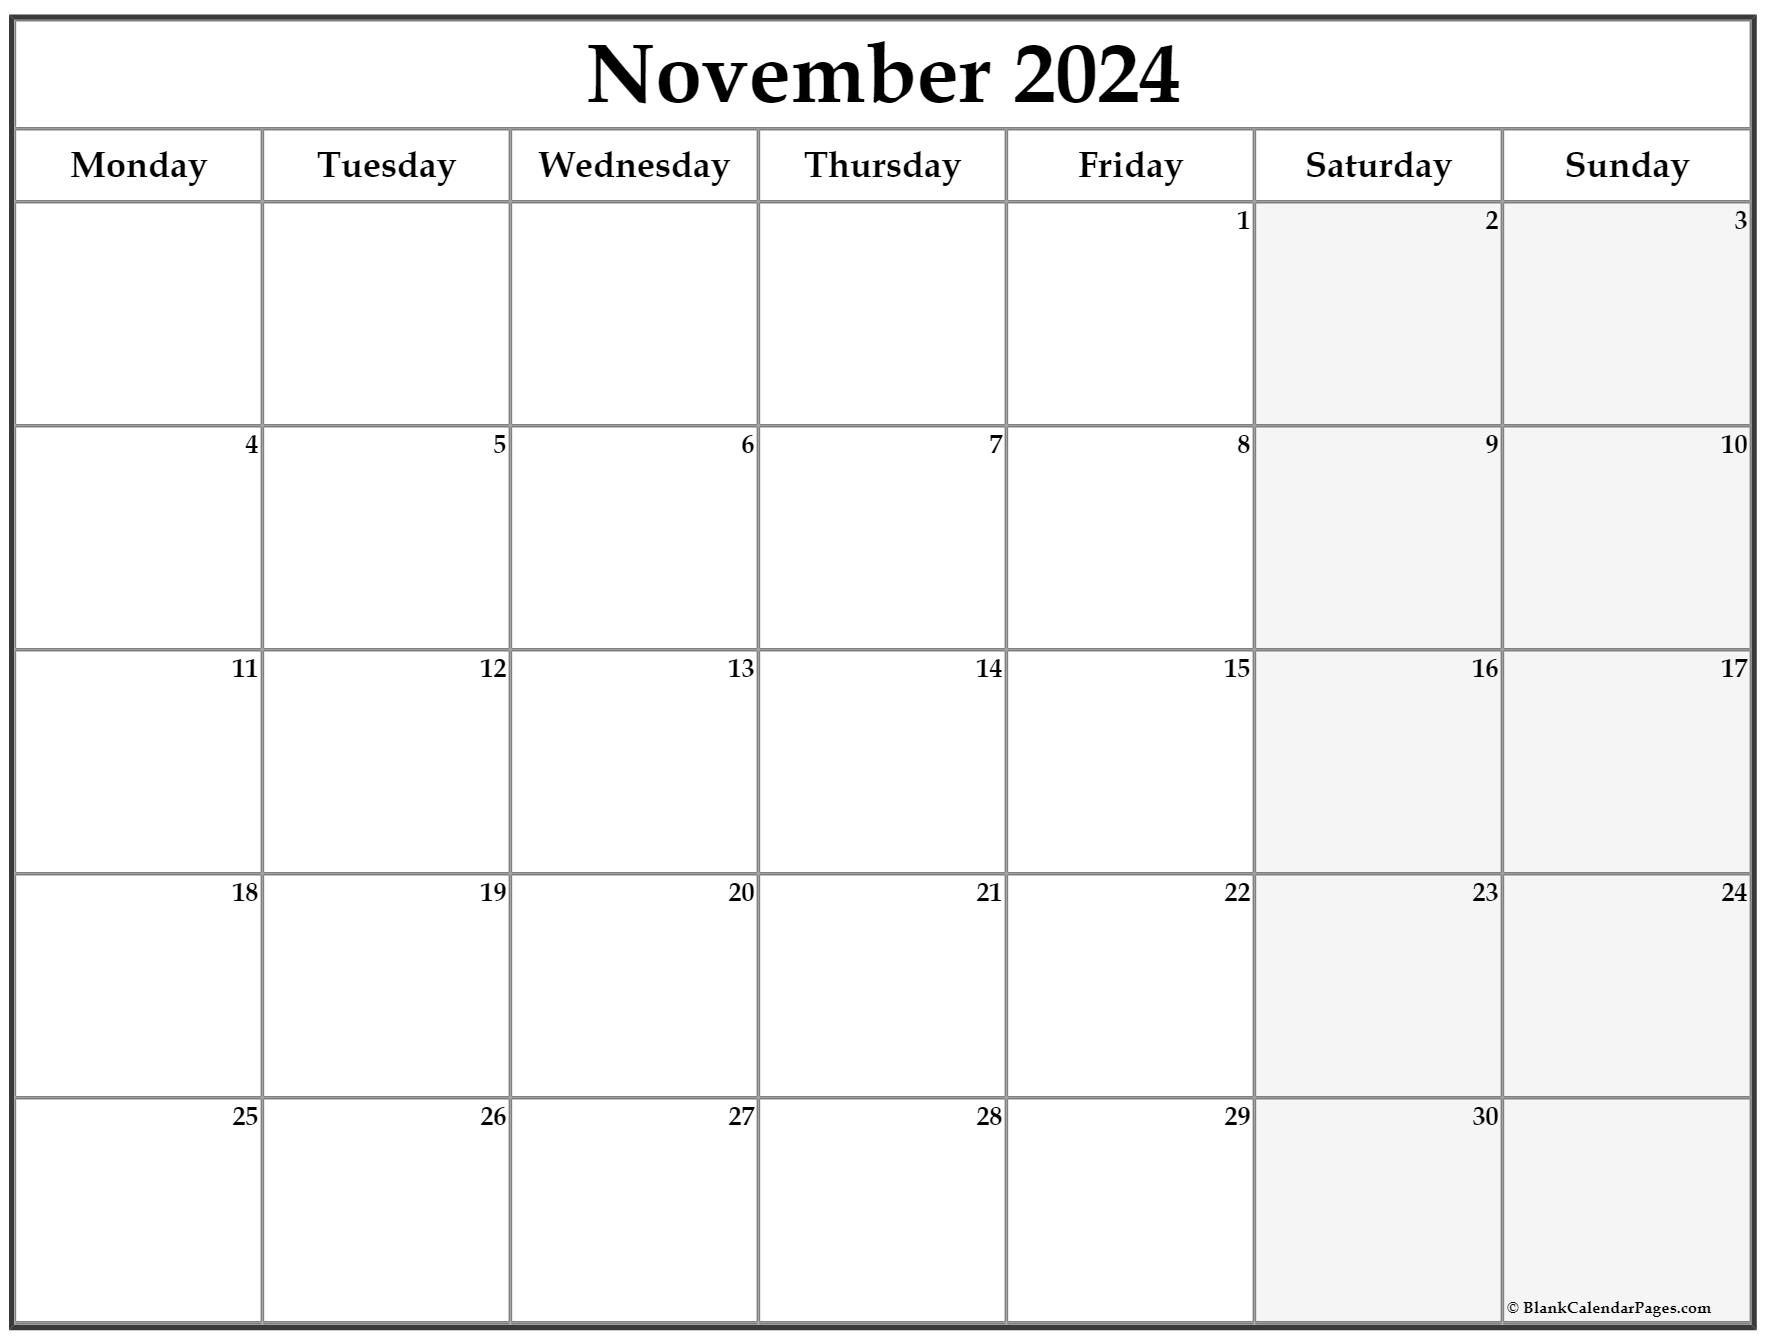 November 2019 Monday Calendar | Monday to Sunday